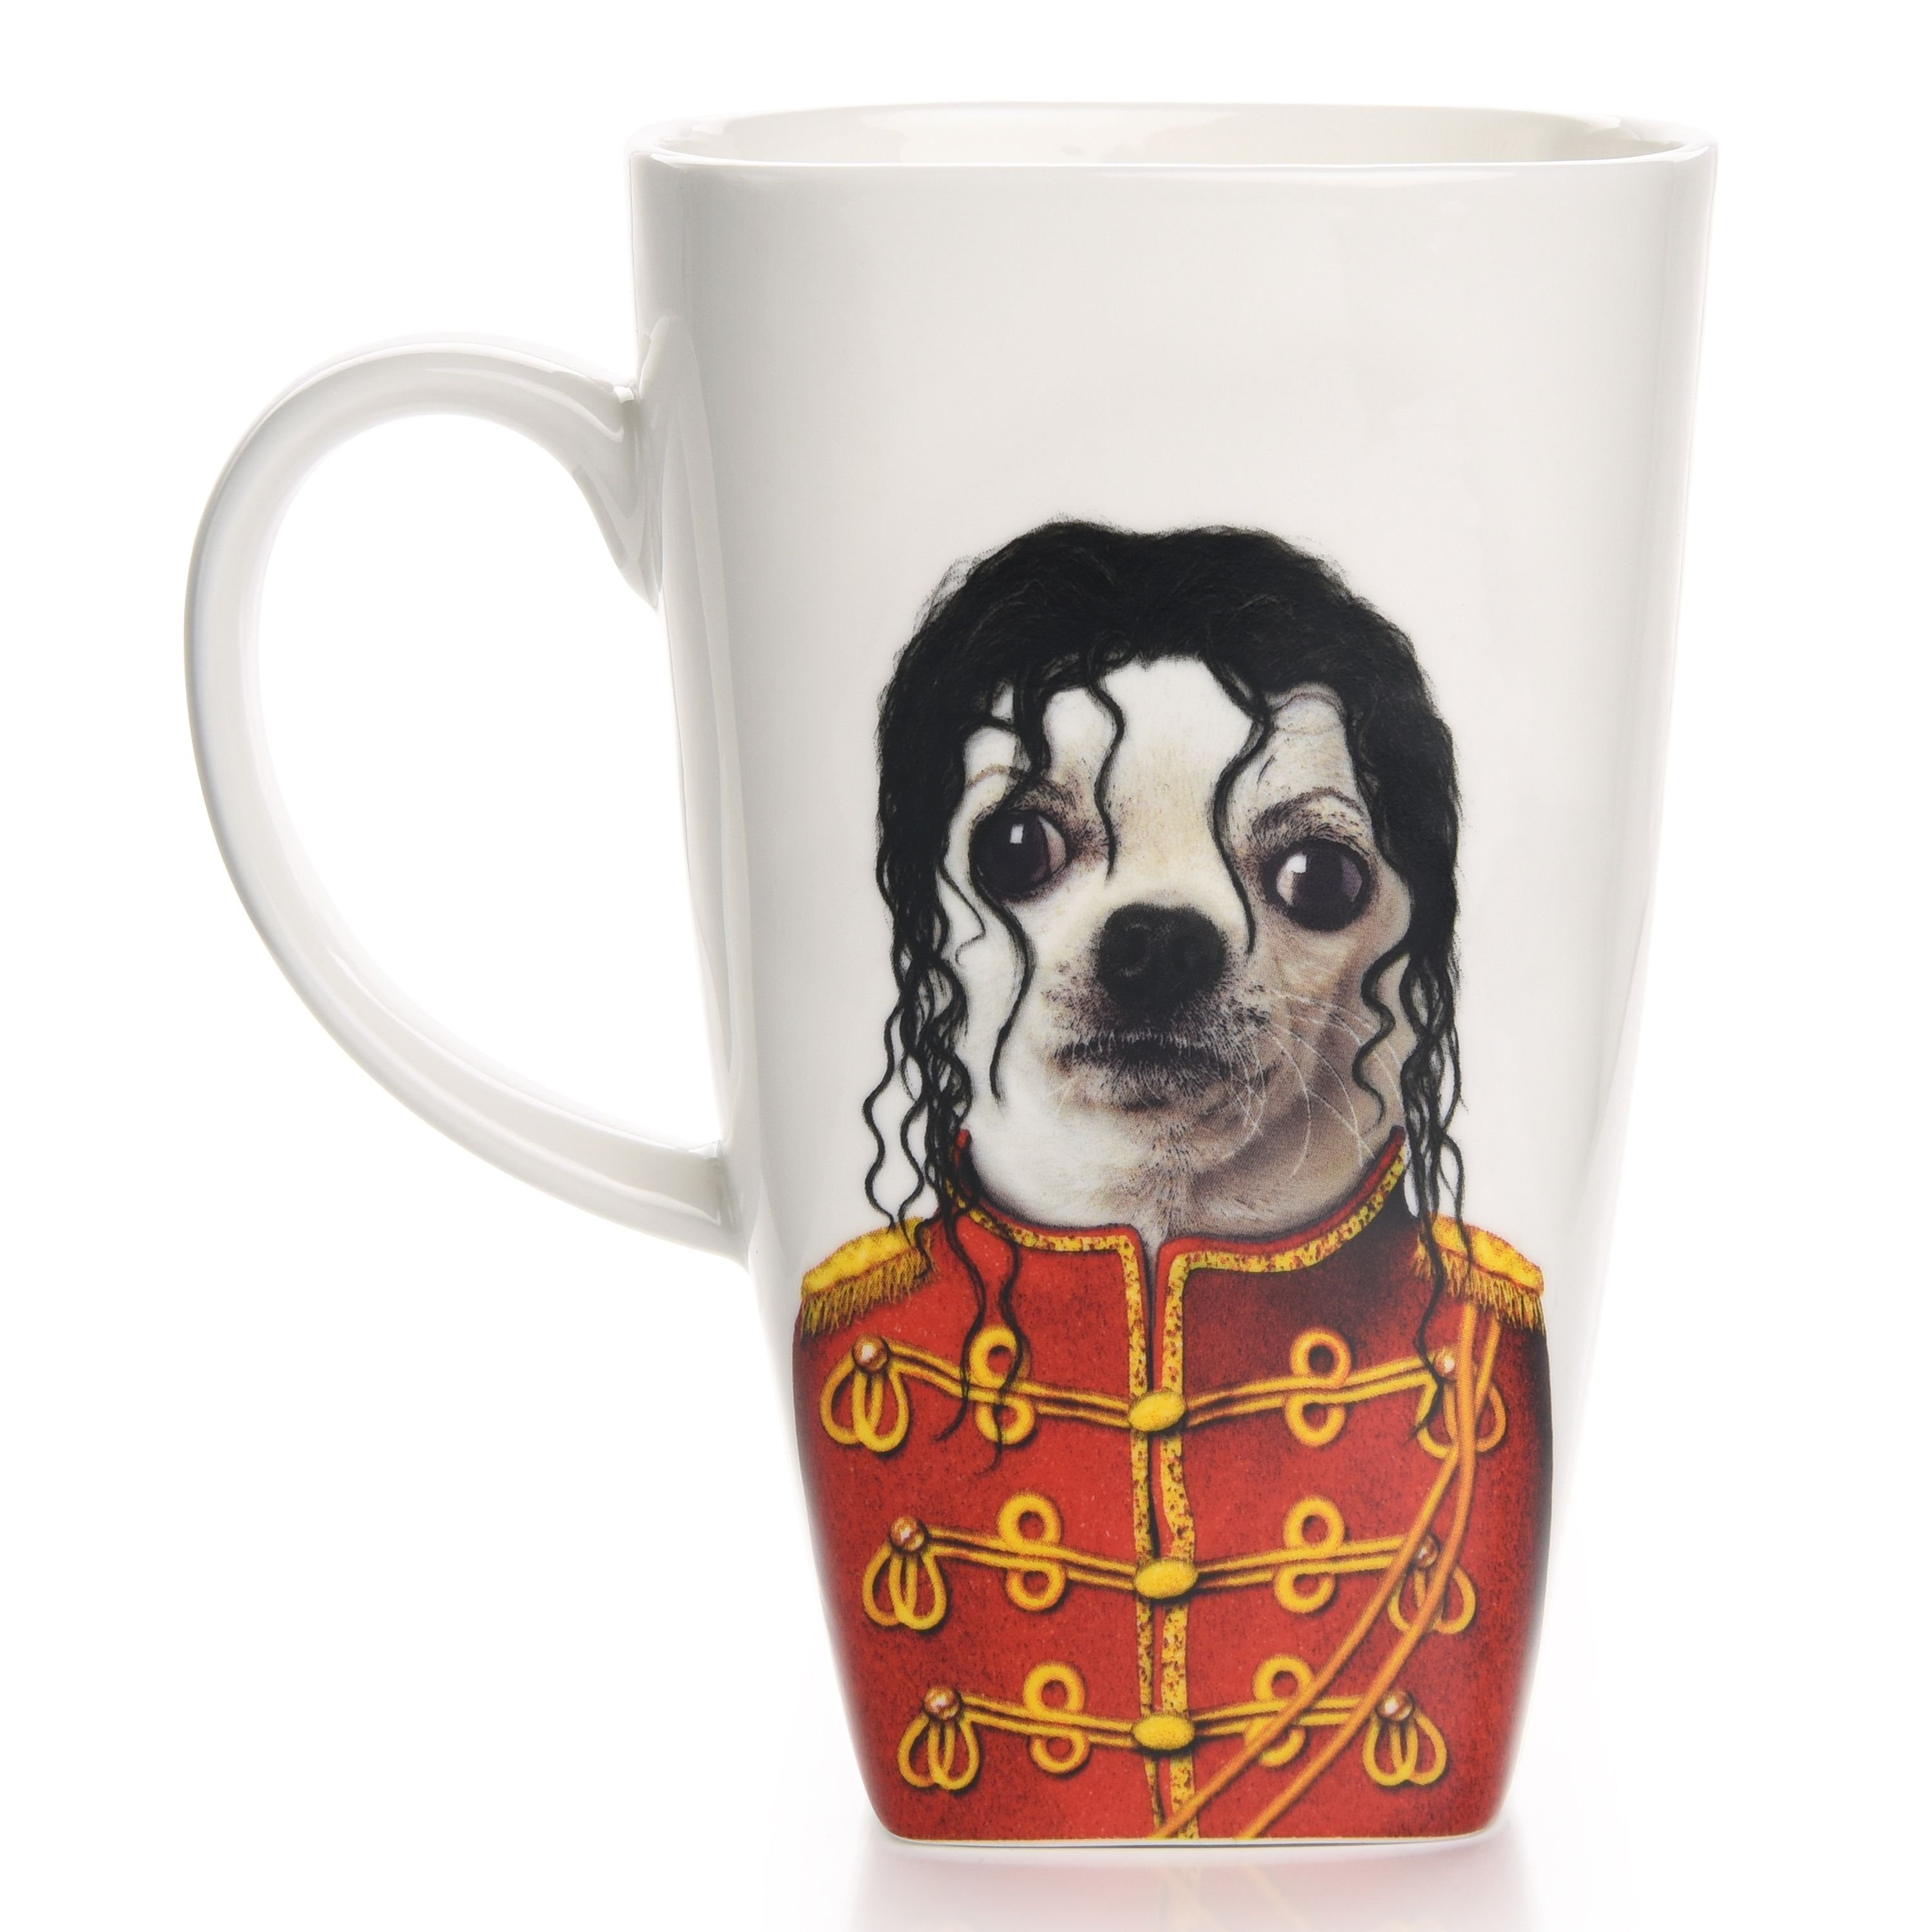 Mug-pr006-20 20 Oz Pets Rock Pop Collectible Fine Bone China Coffee Mug - White